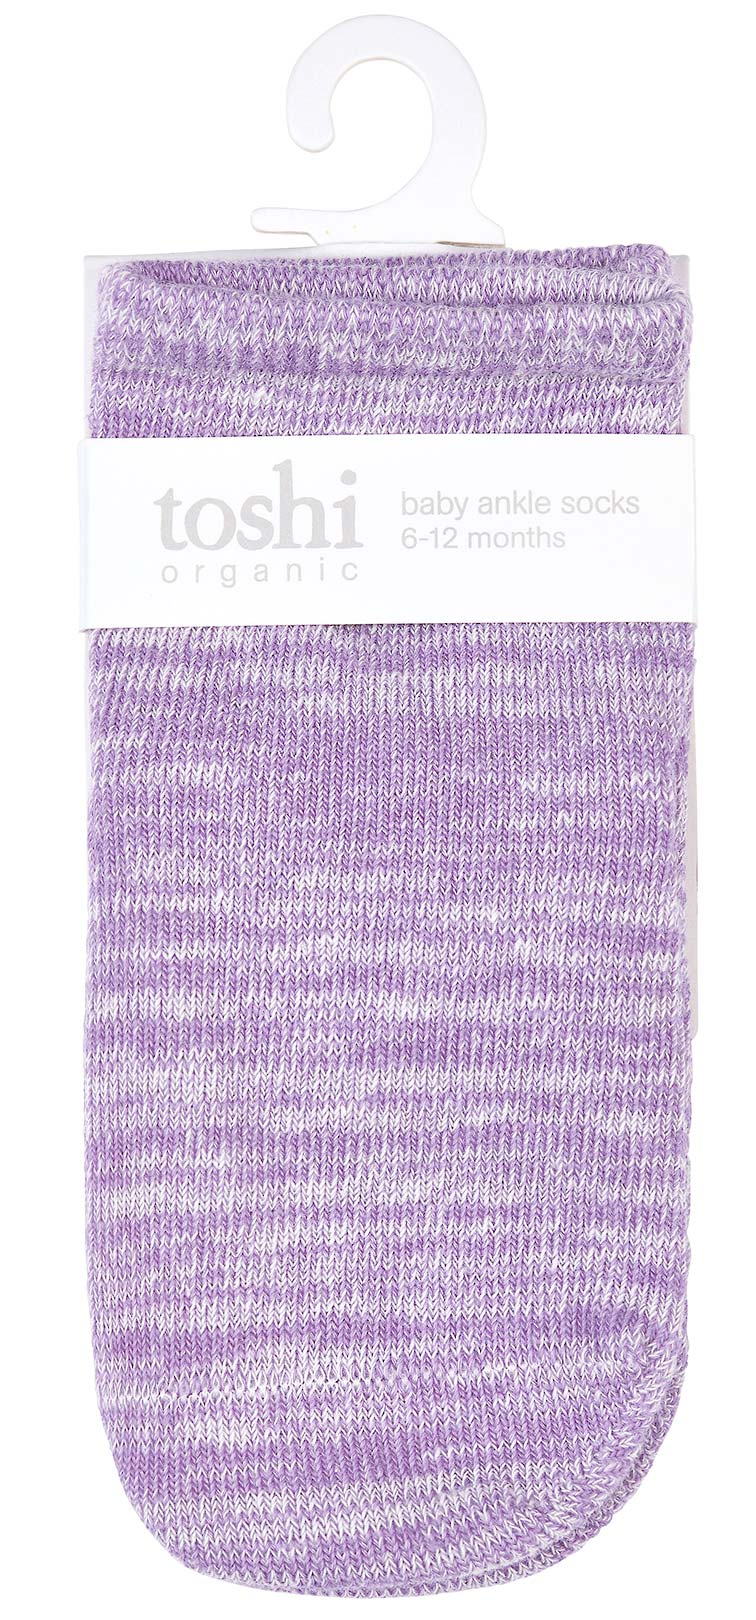 Organic Ankle Socks - Marle Lavender